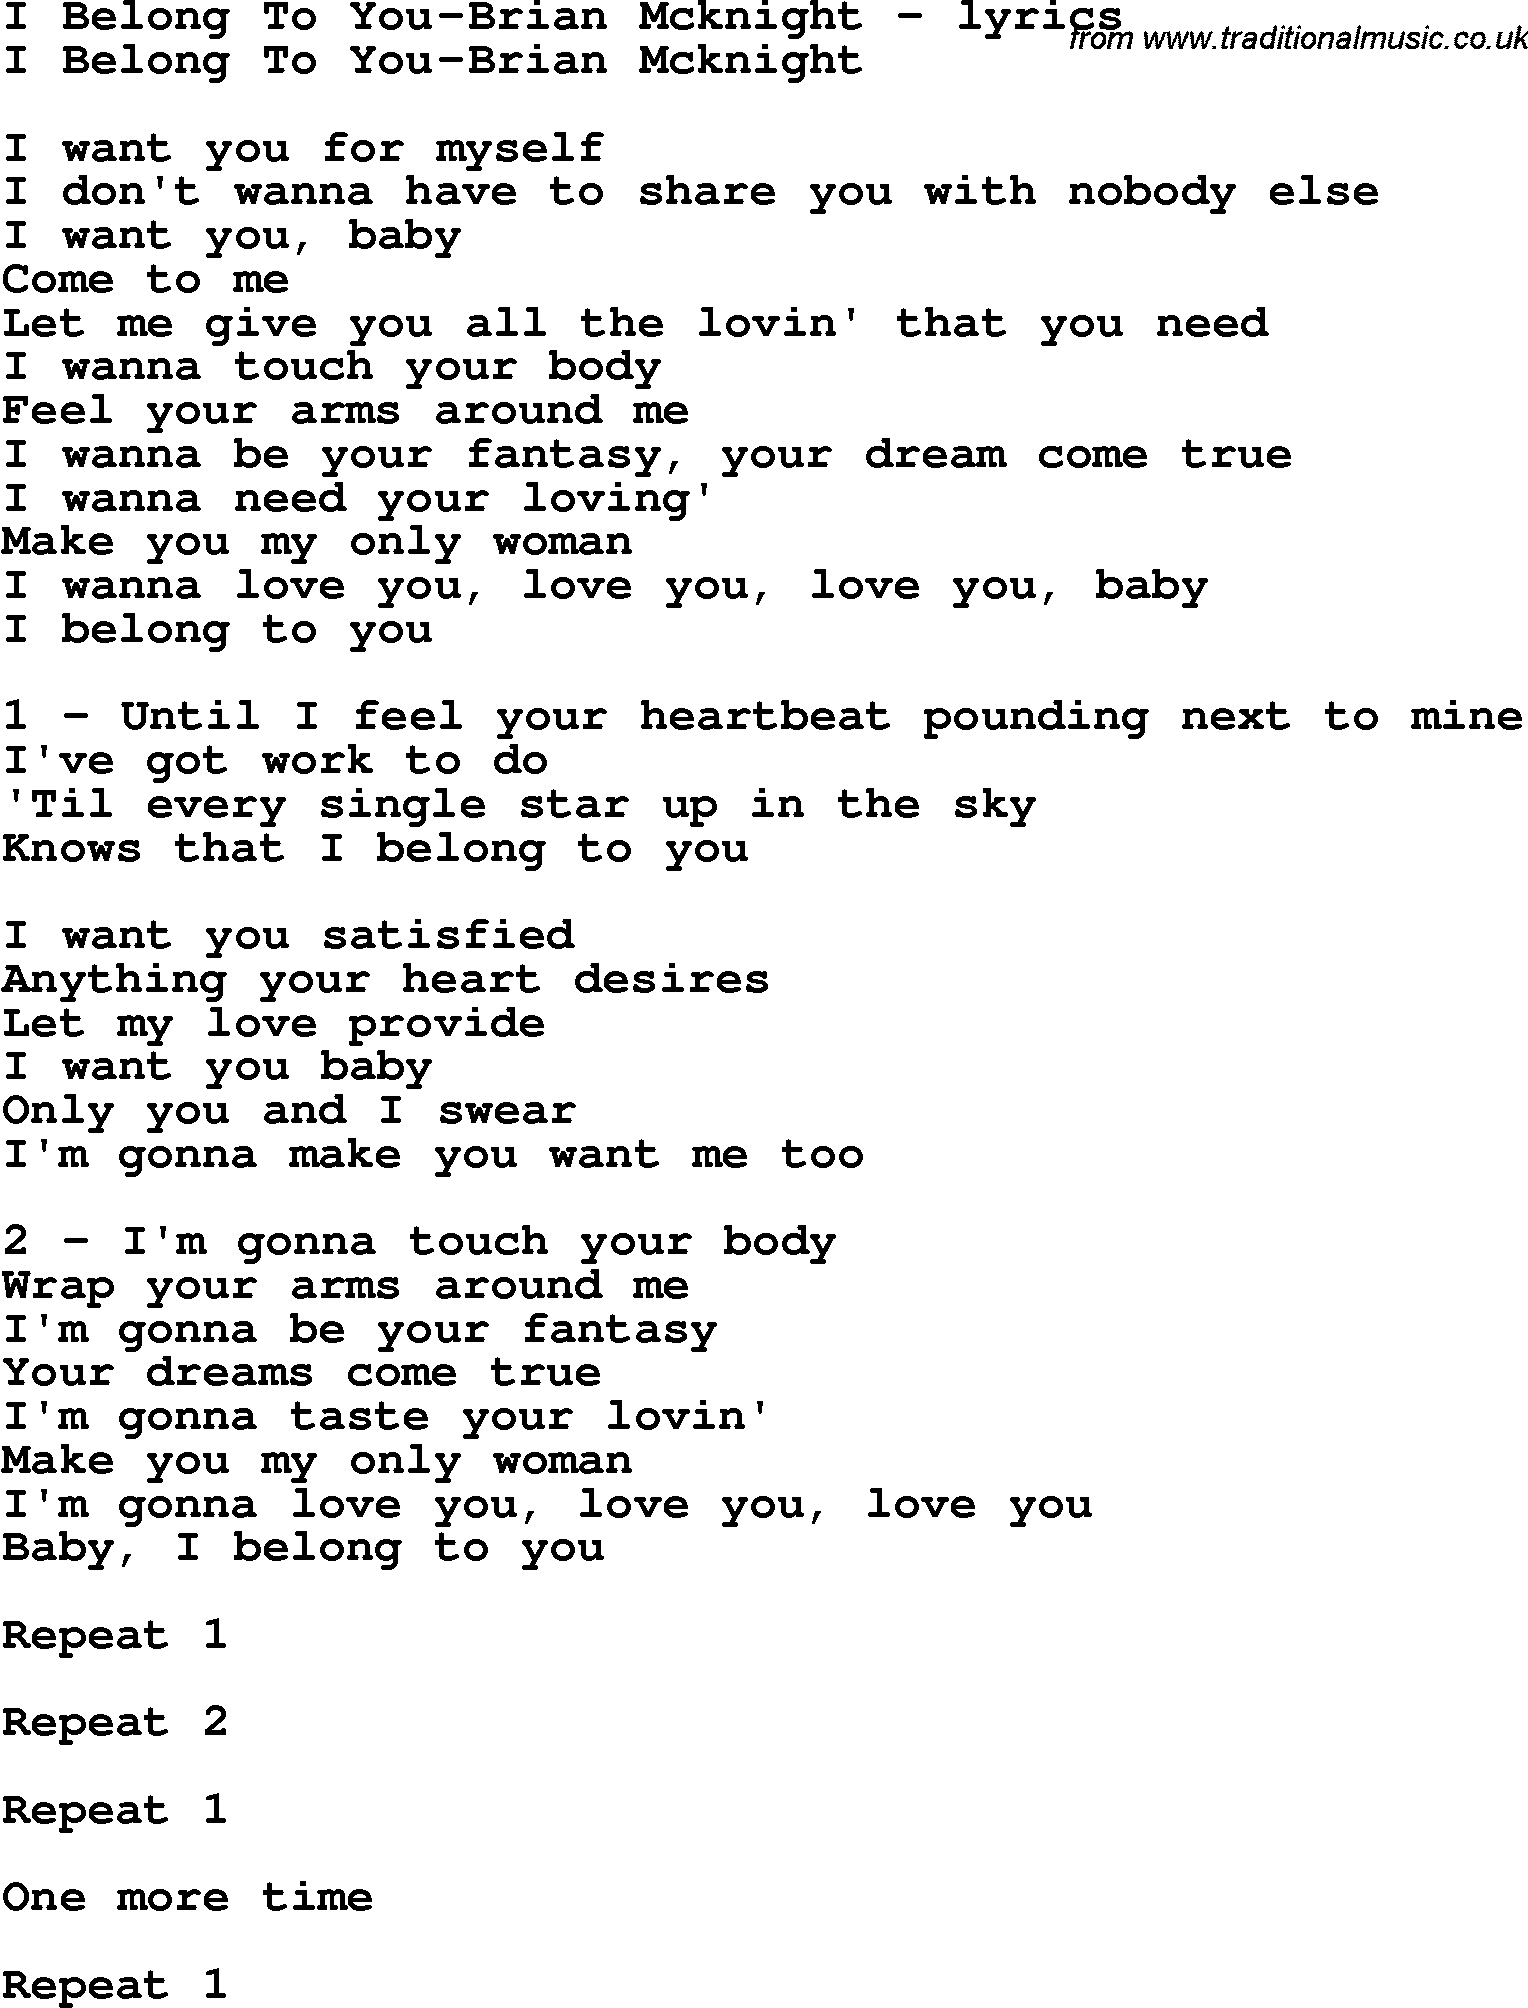 Love Song Lyrics for: I Belong To You-Brian Mcknight